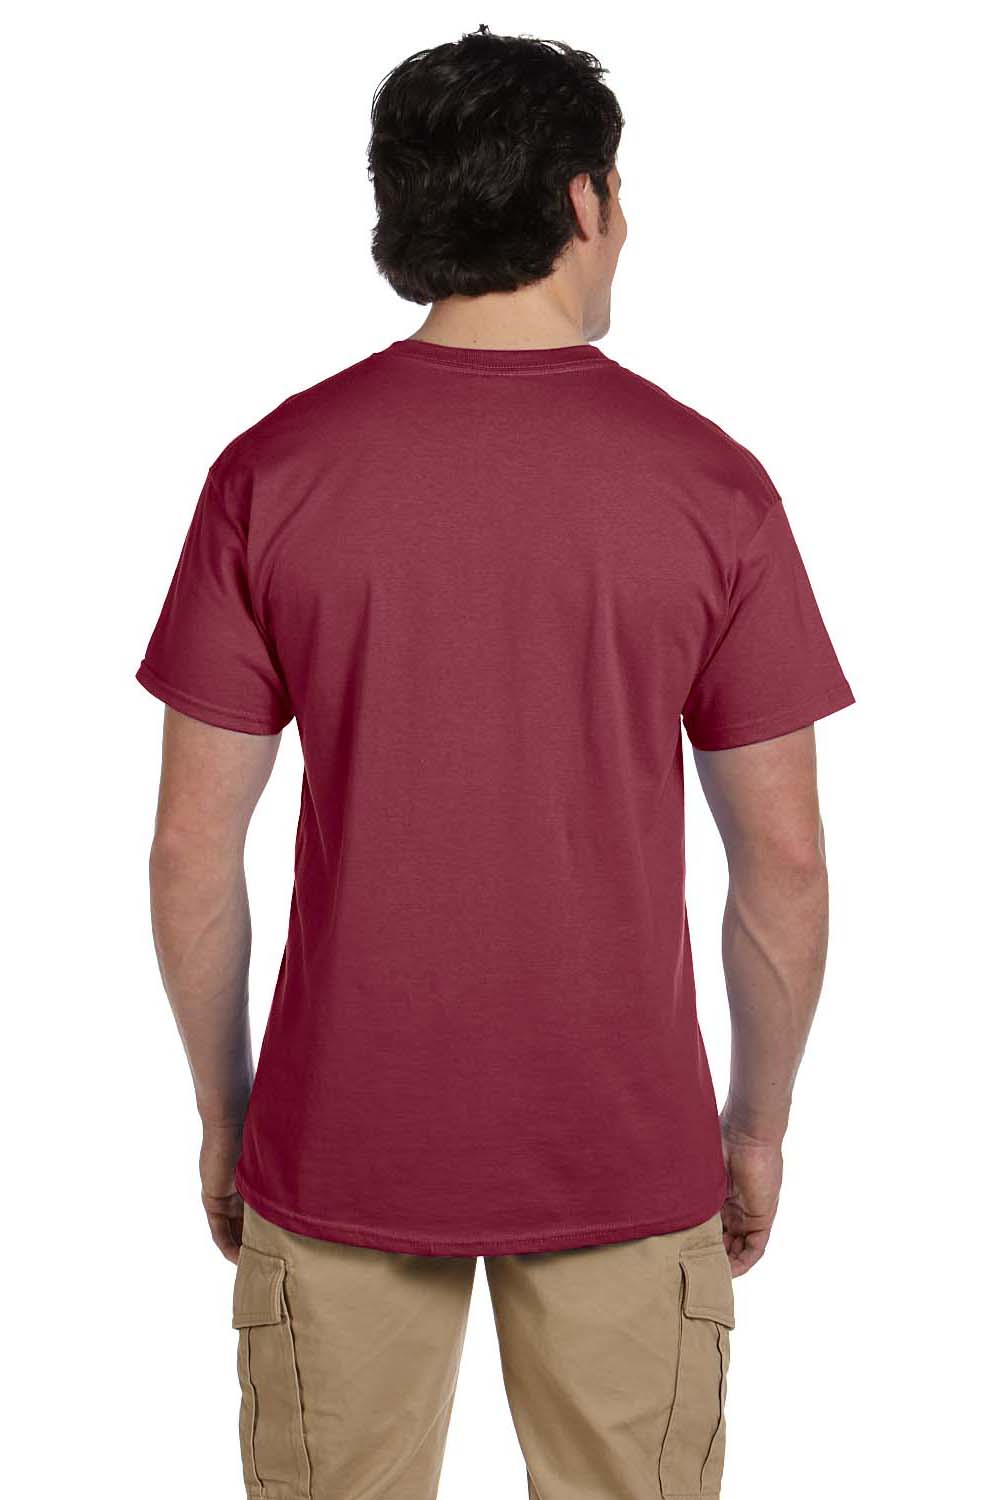 Hanes 5170 Mens EcoSmart Short Sleeve Crewneck T-Shirt Heather Red Back